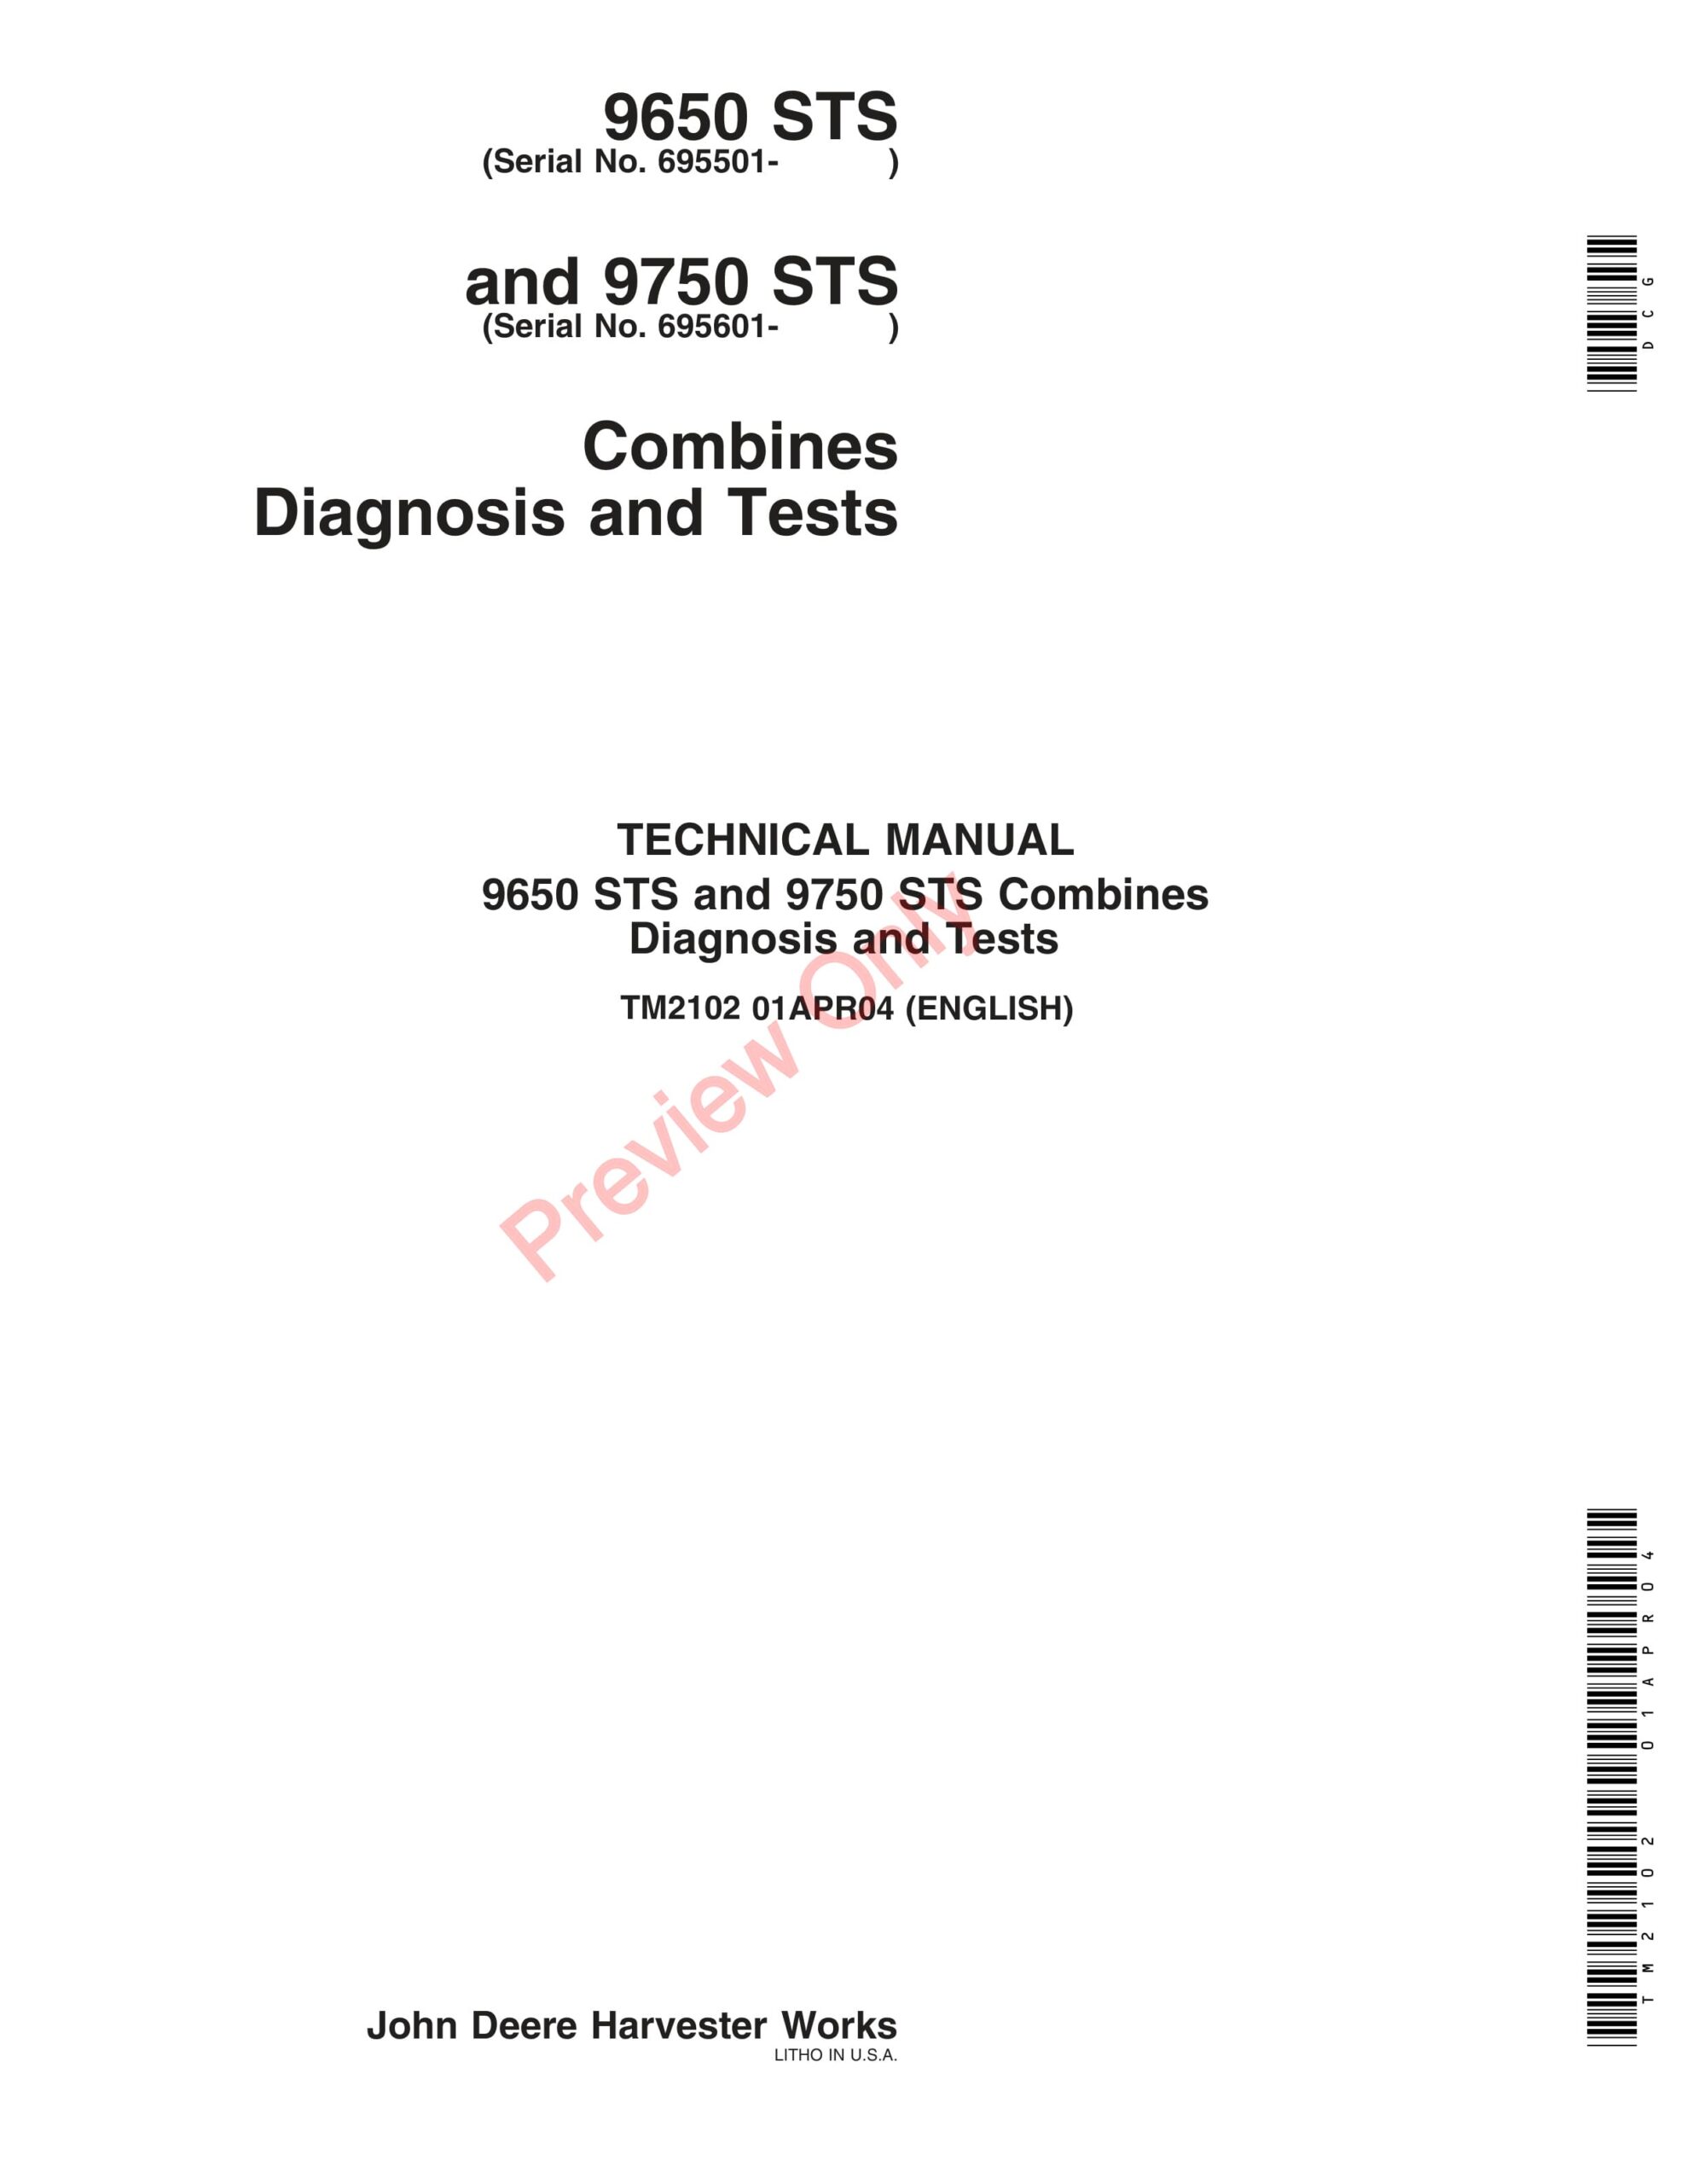 John Deere 9650 STS Combines (695501-), 9750 STS Combines (695601-) Technical Manual TM2102 01APR04-1